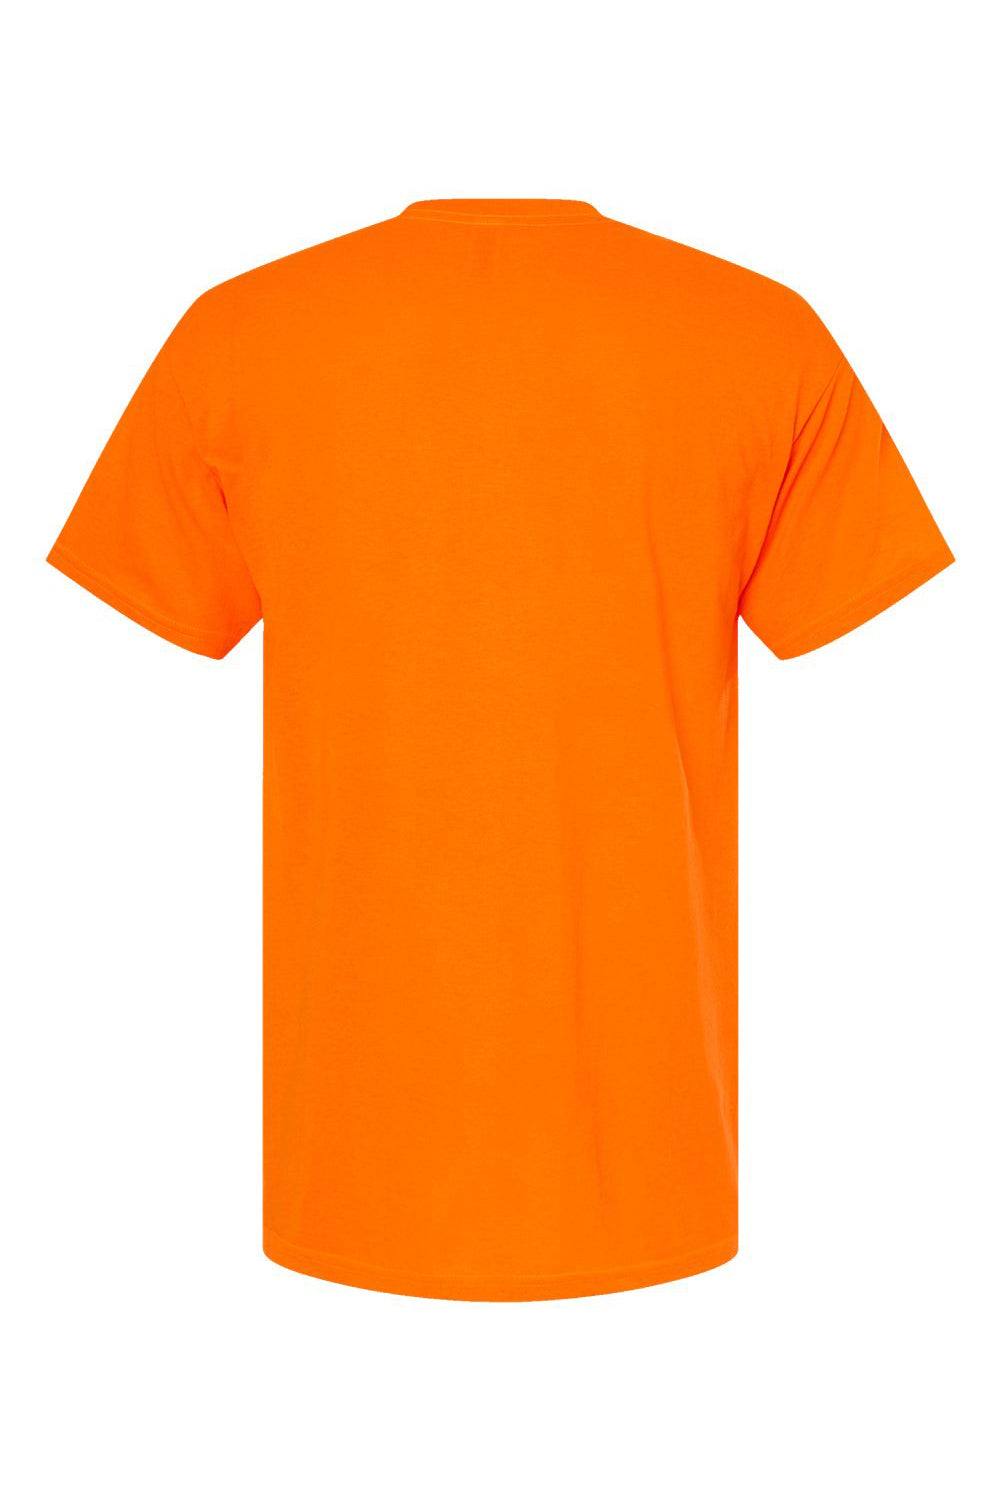 M&O 4800 Mens Gold Soft Touch Short Sleeve Crewneck T-Shirt Safety Orange Flat Back